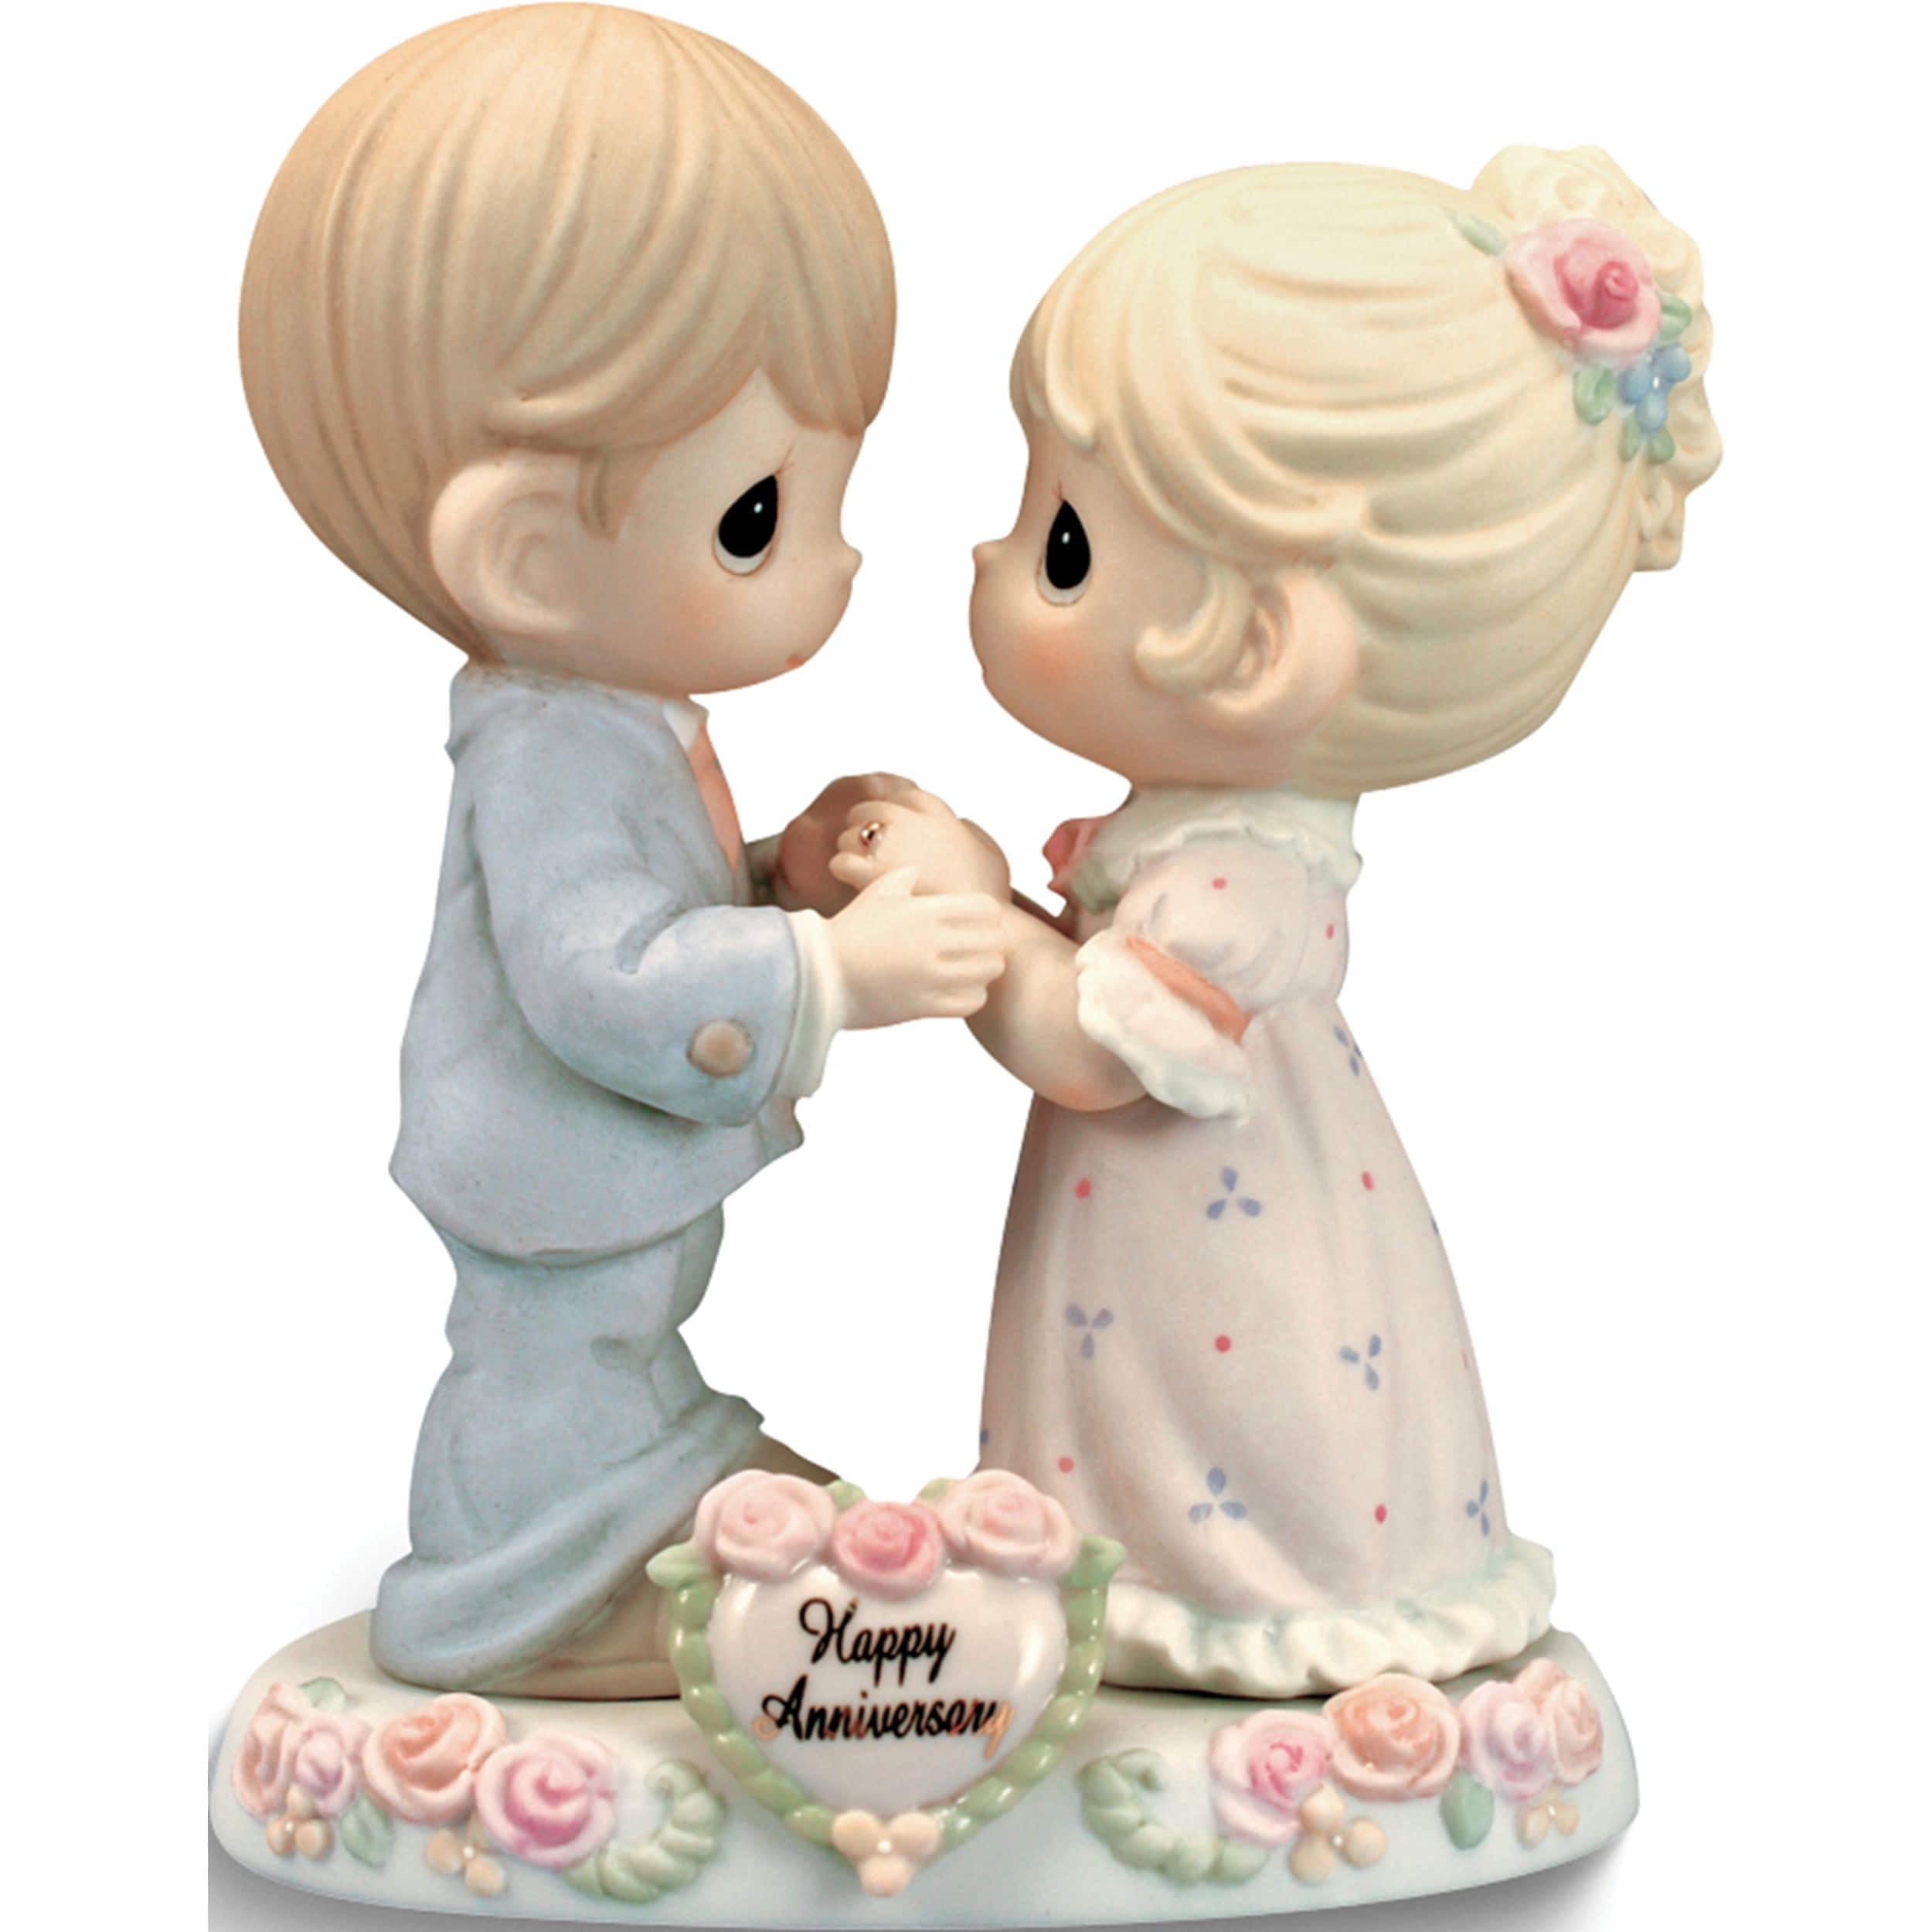 Expecting...LOVE Bisque Porcelain Figurine Precious Moments 940004 